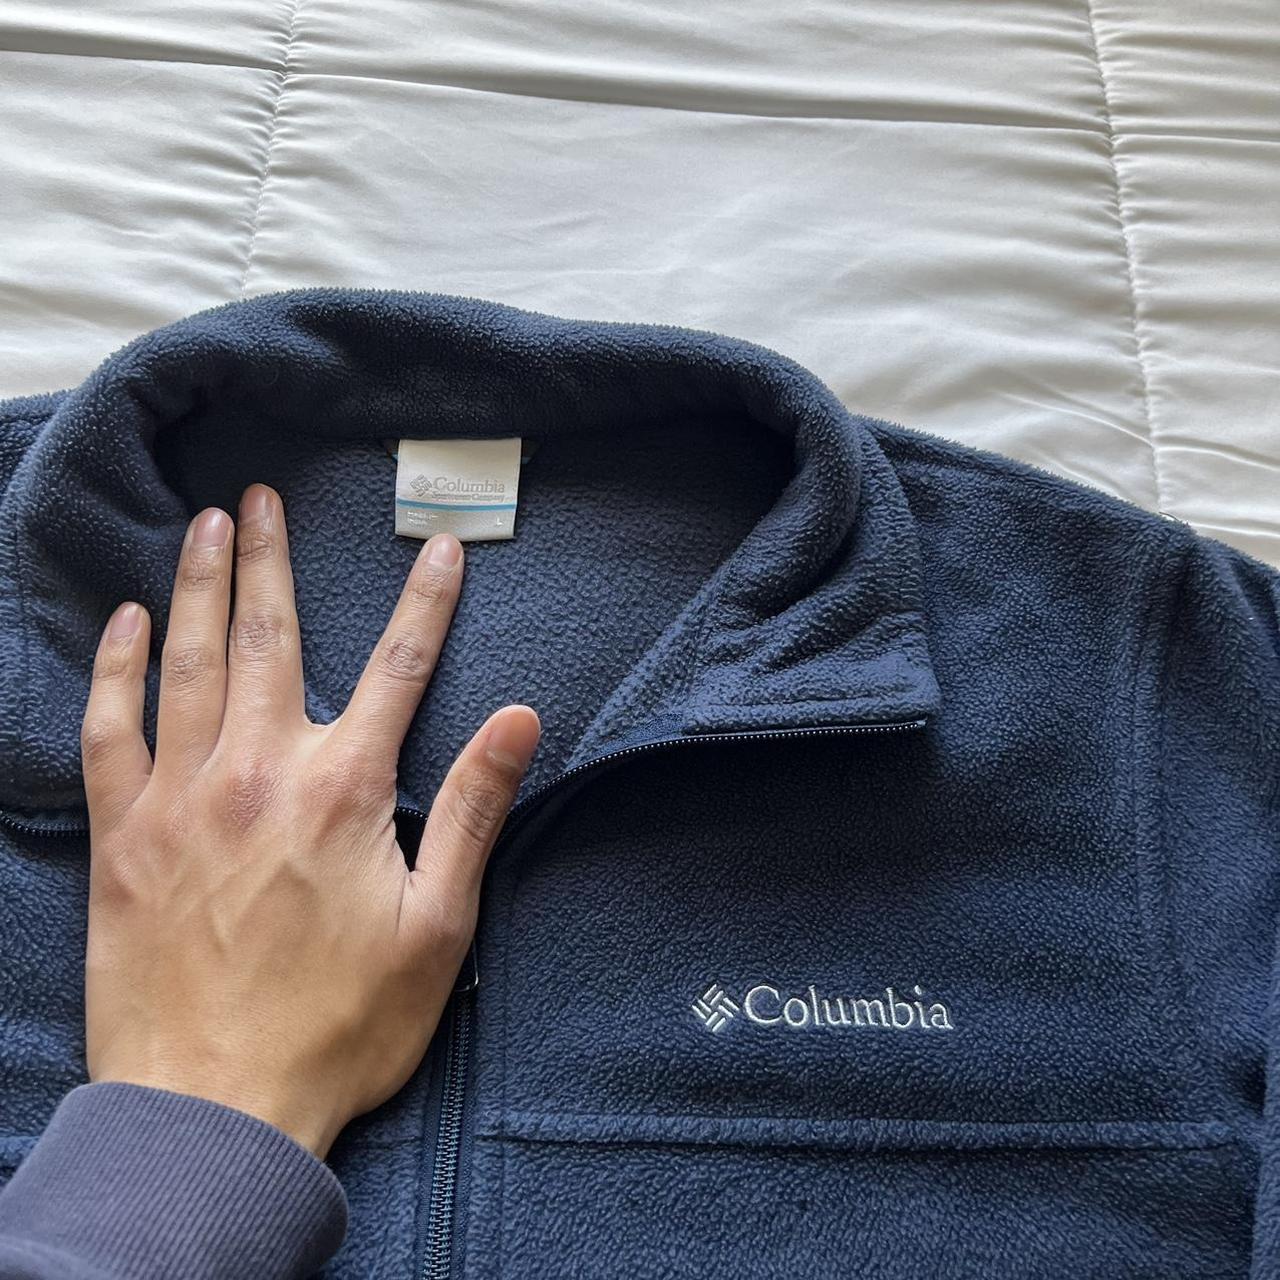 Columbia Sportswear Men's Navy and Blue Jacket (3)